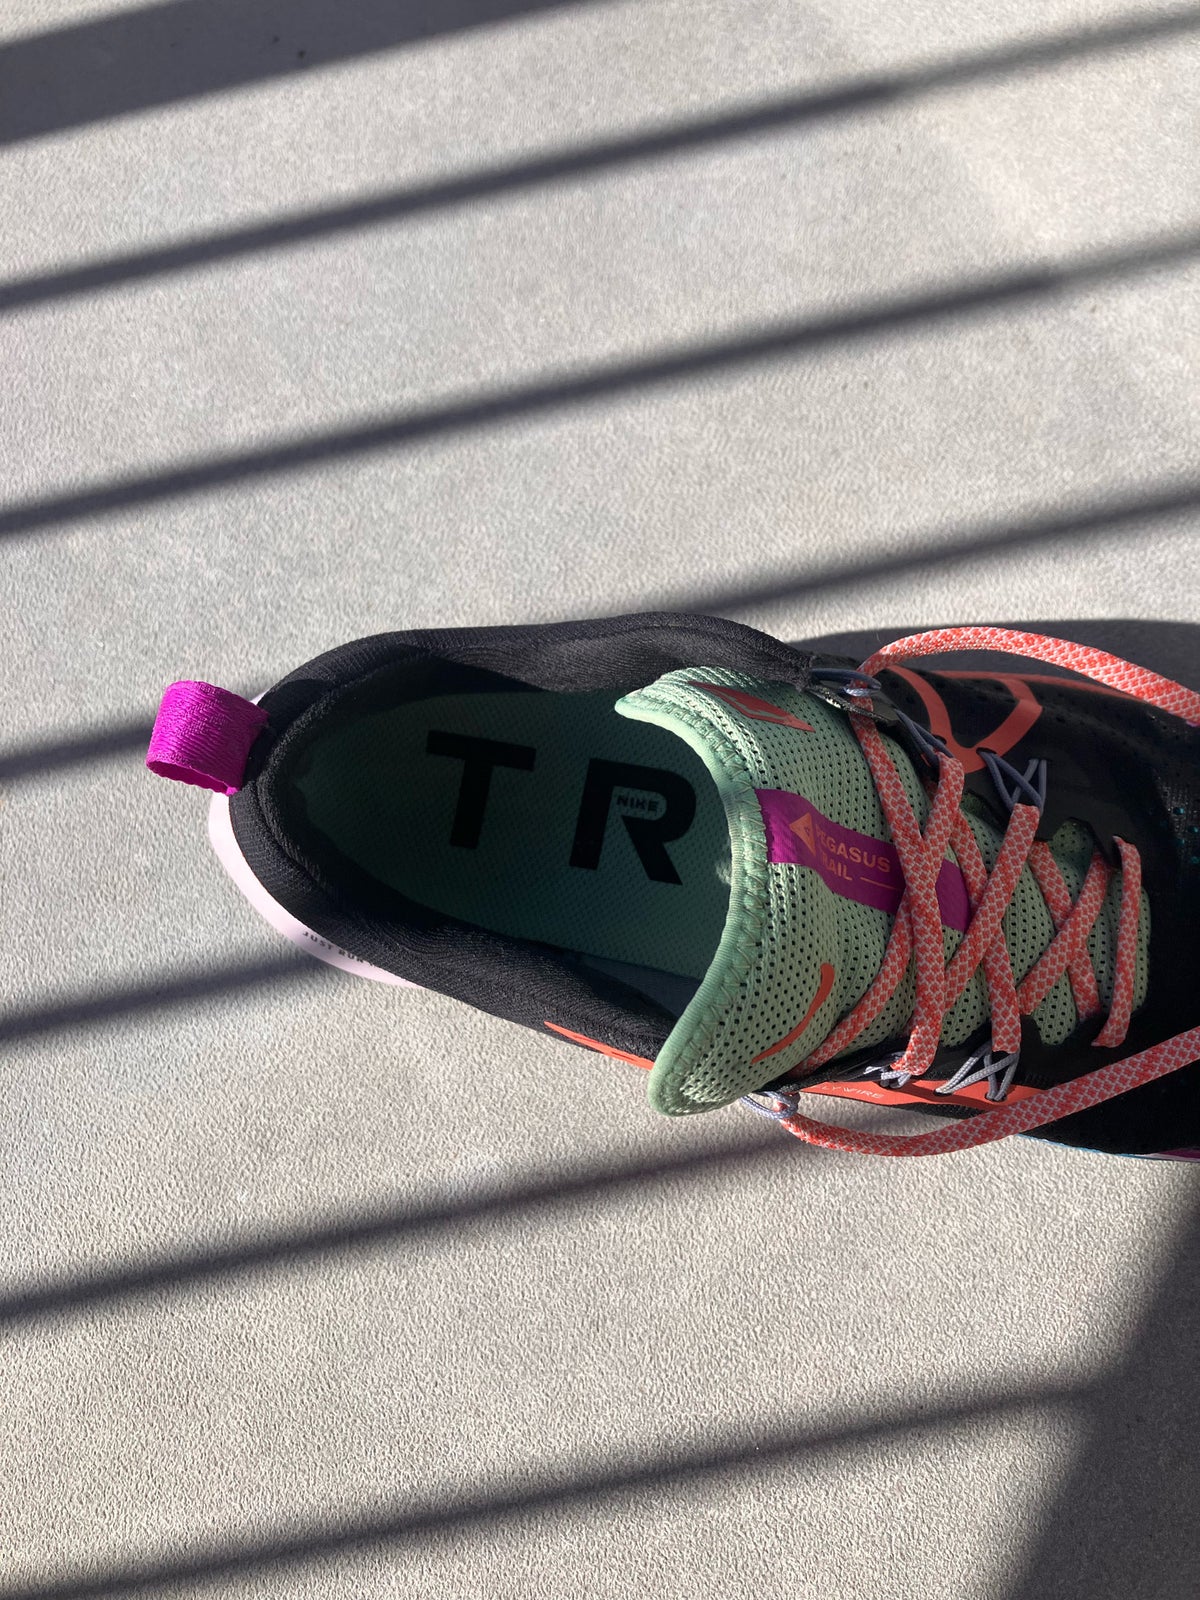 Løbesko, Nike Pegasus Trail 4 str. US9/42.5/27cm, str.